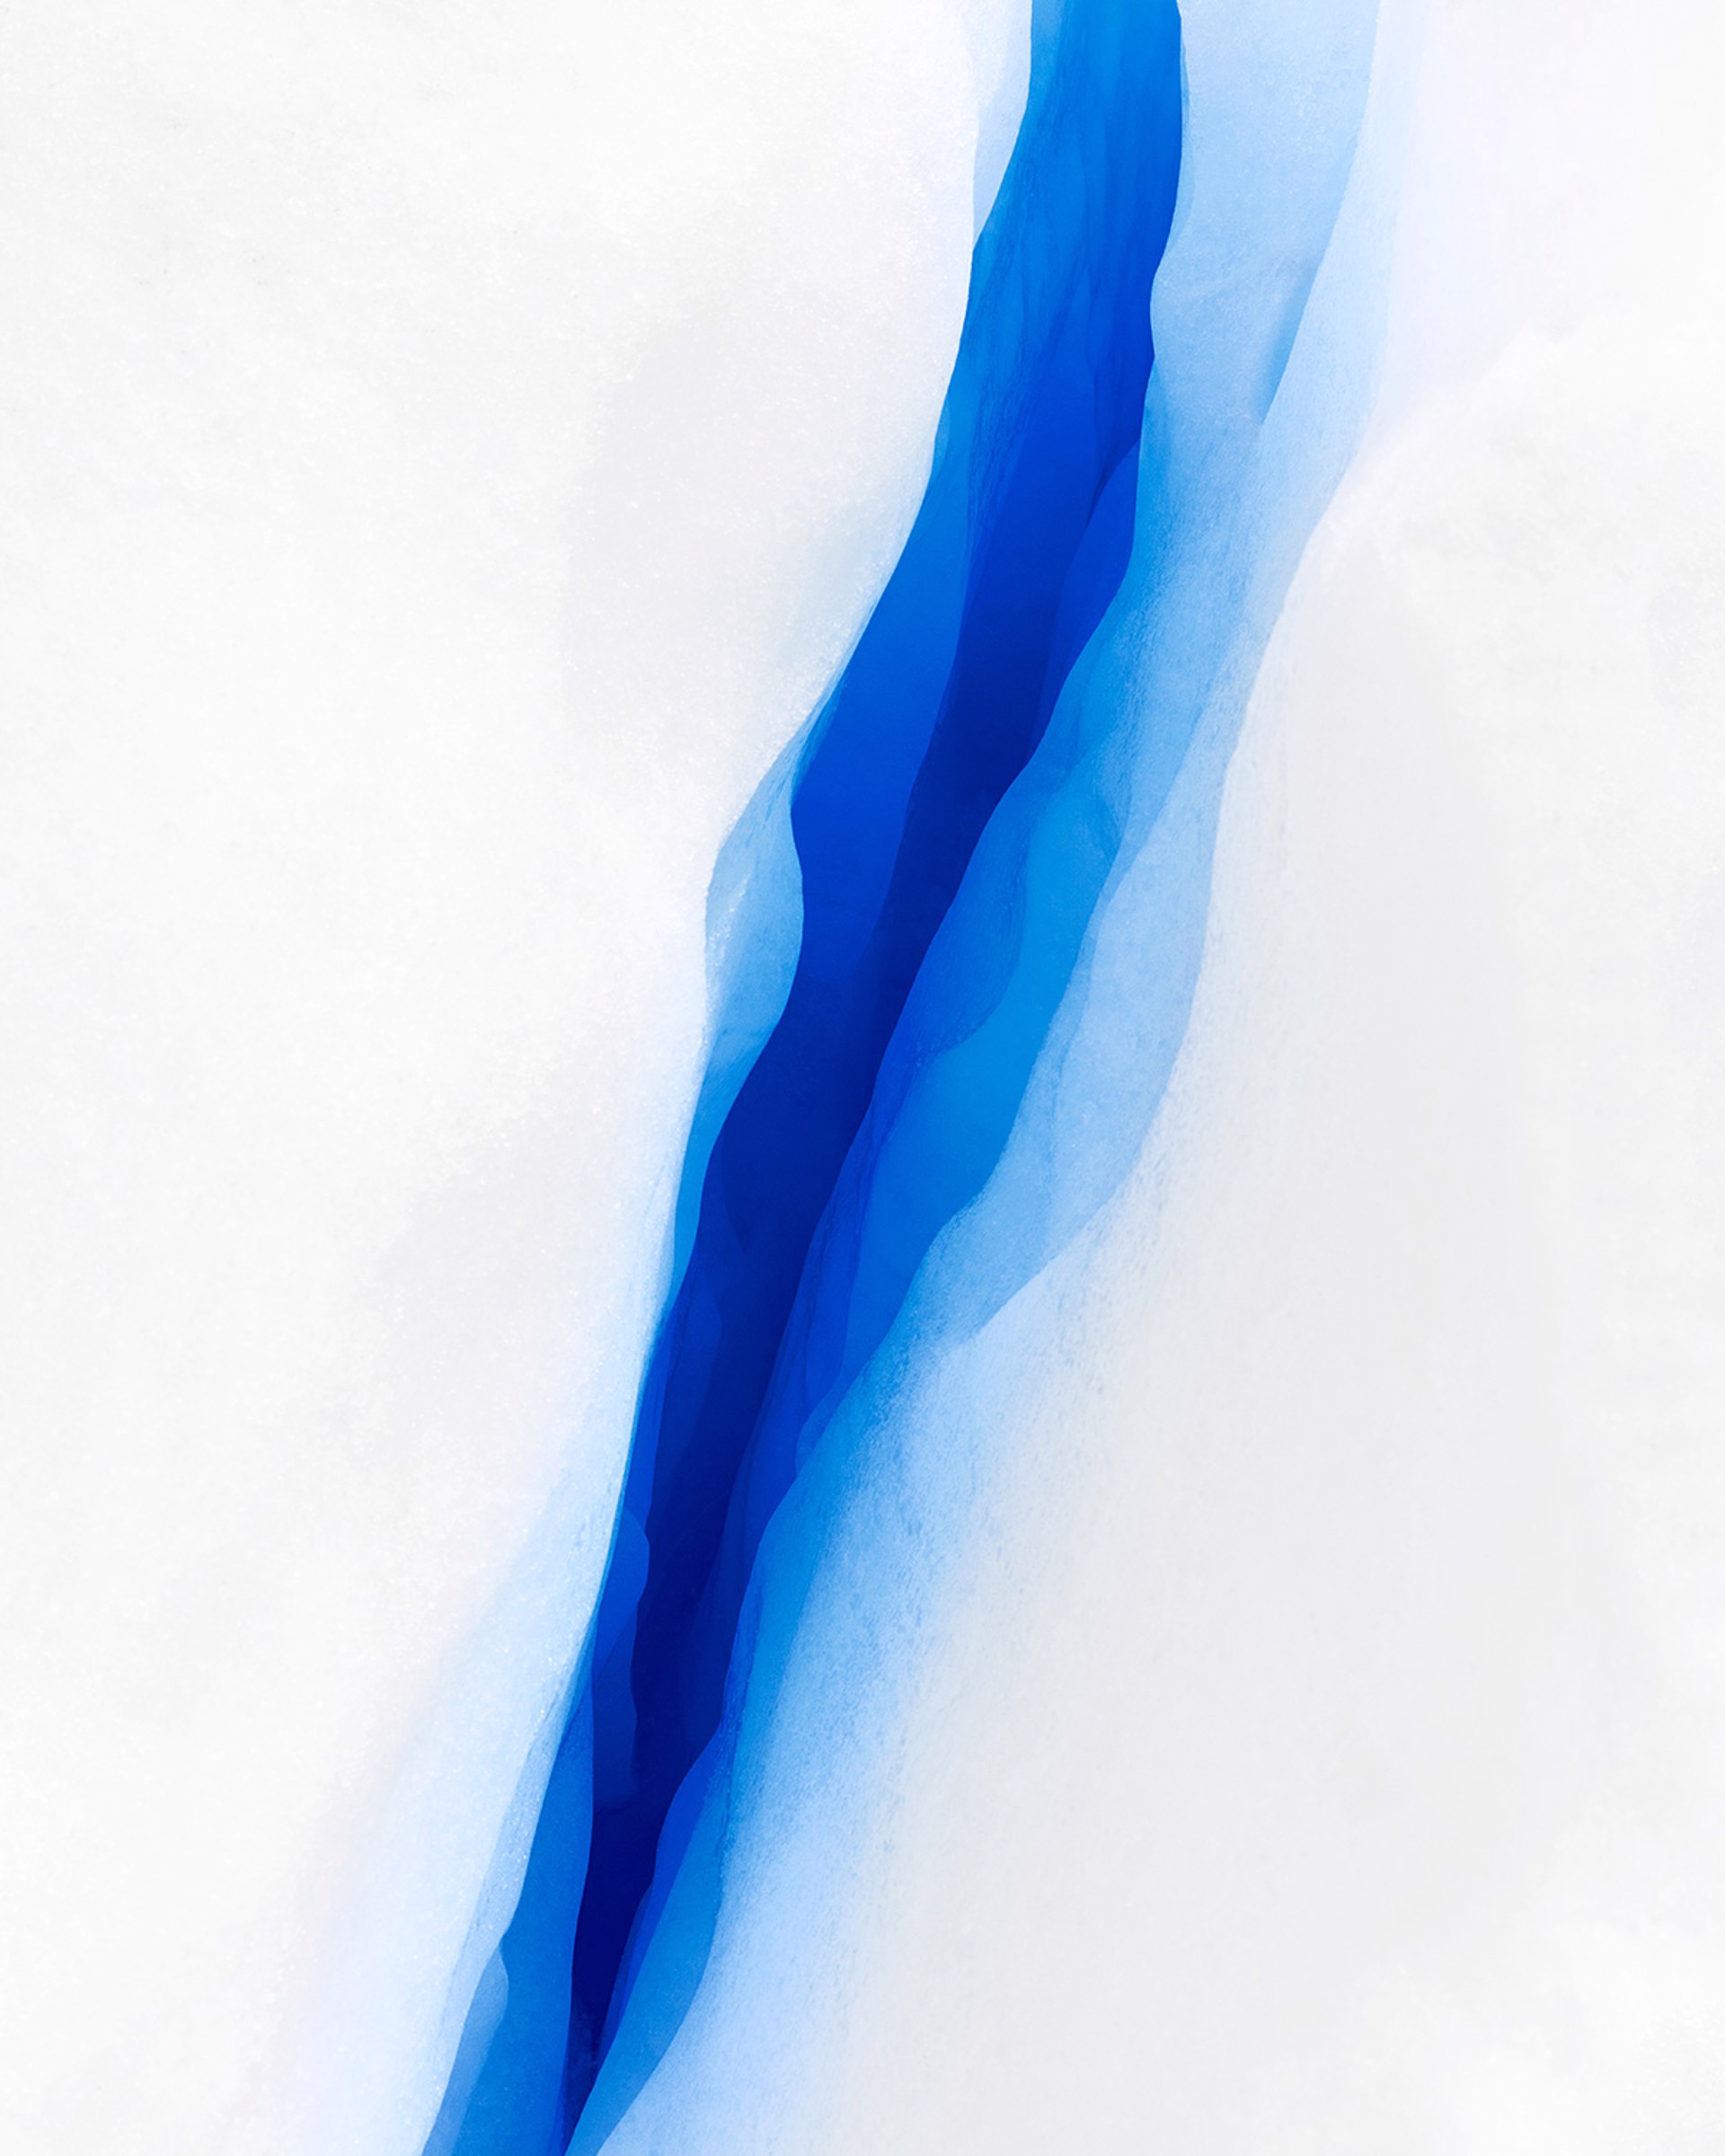 Glacier #21 by Jonathan Smith